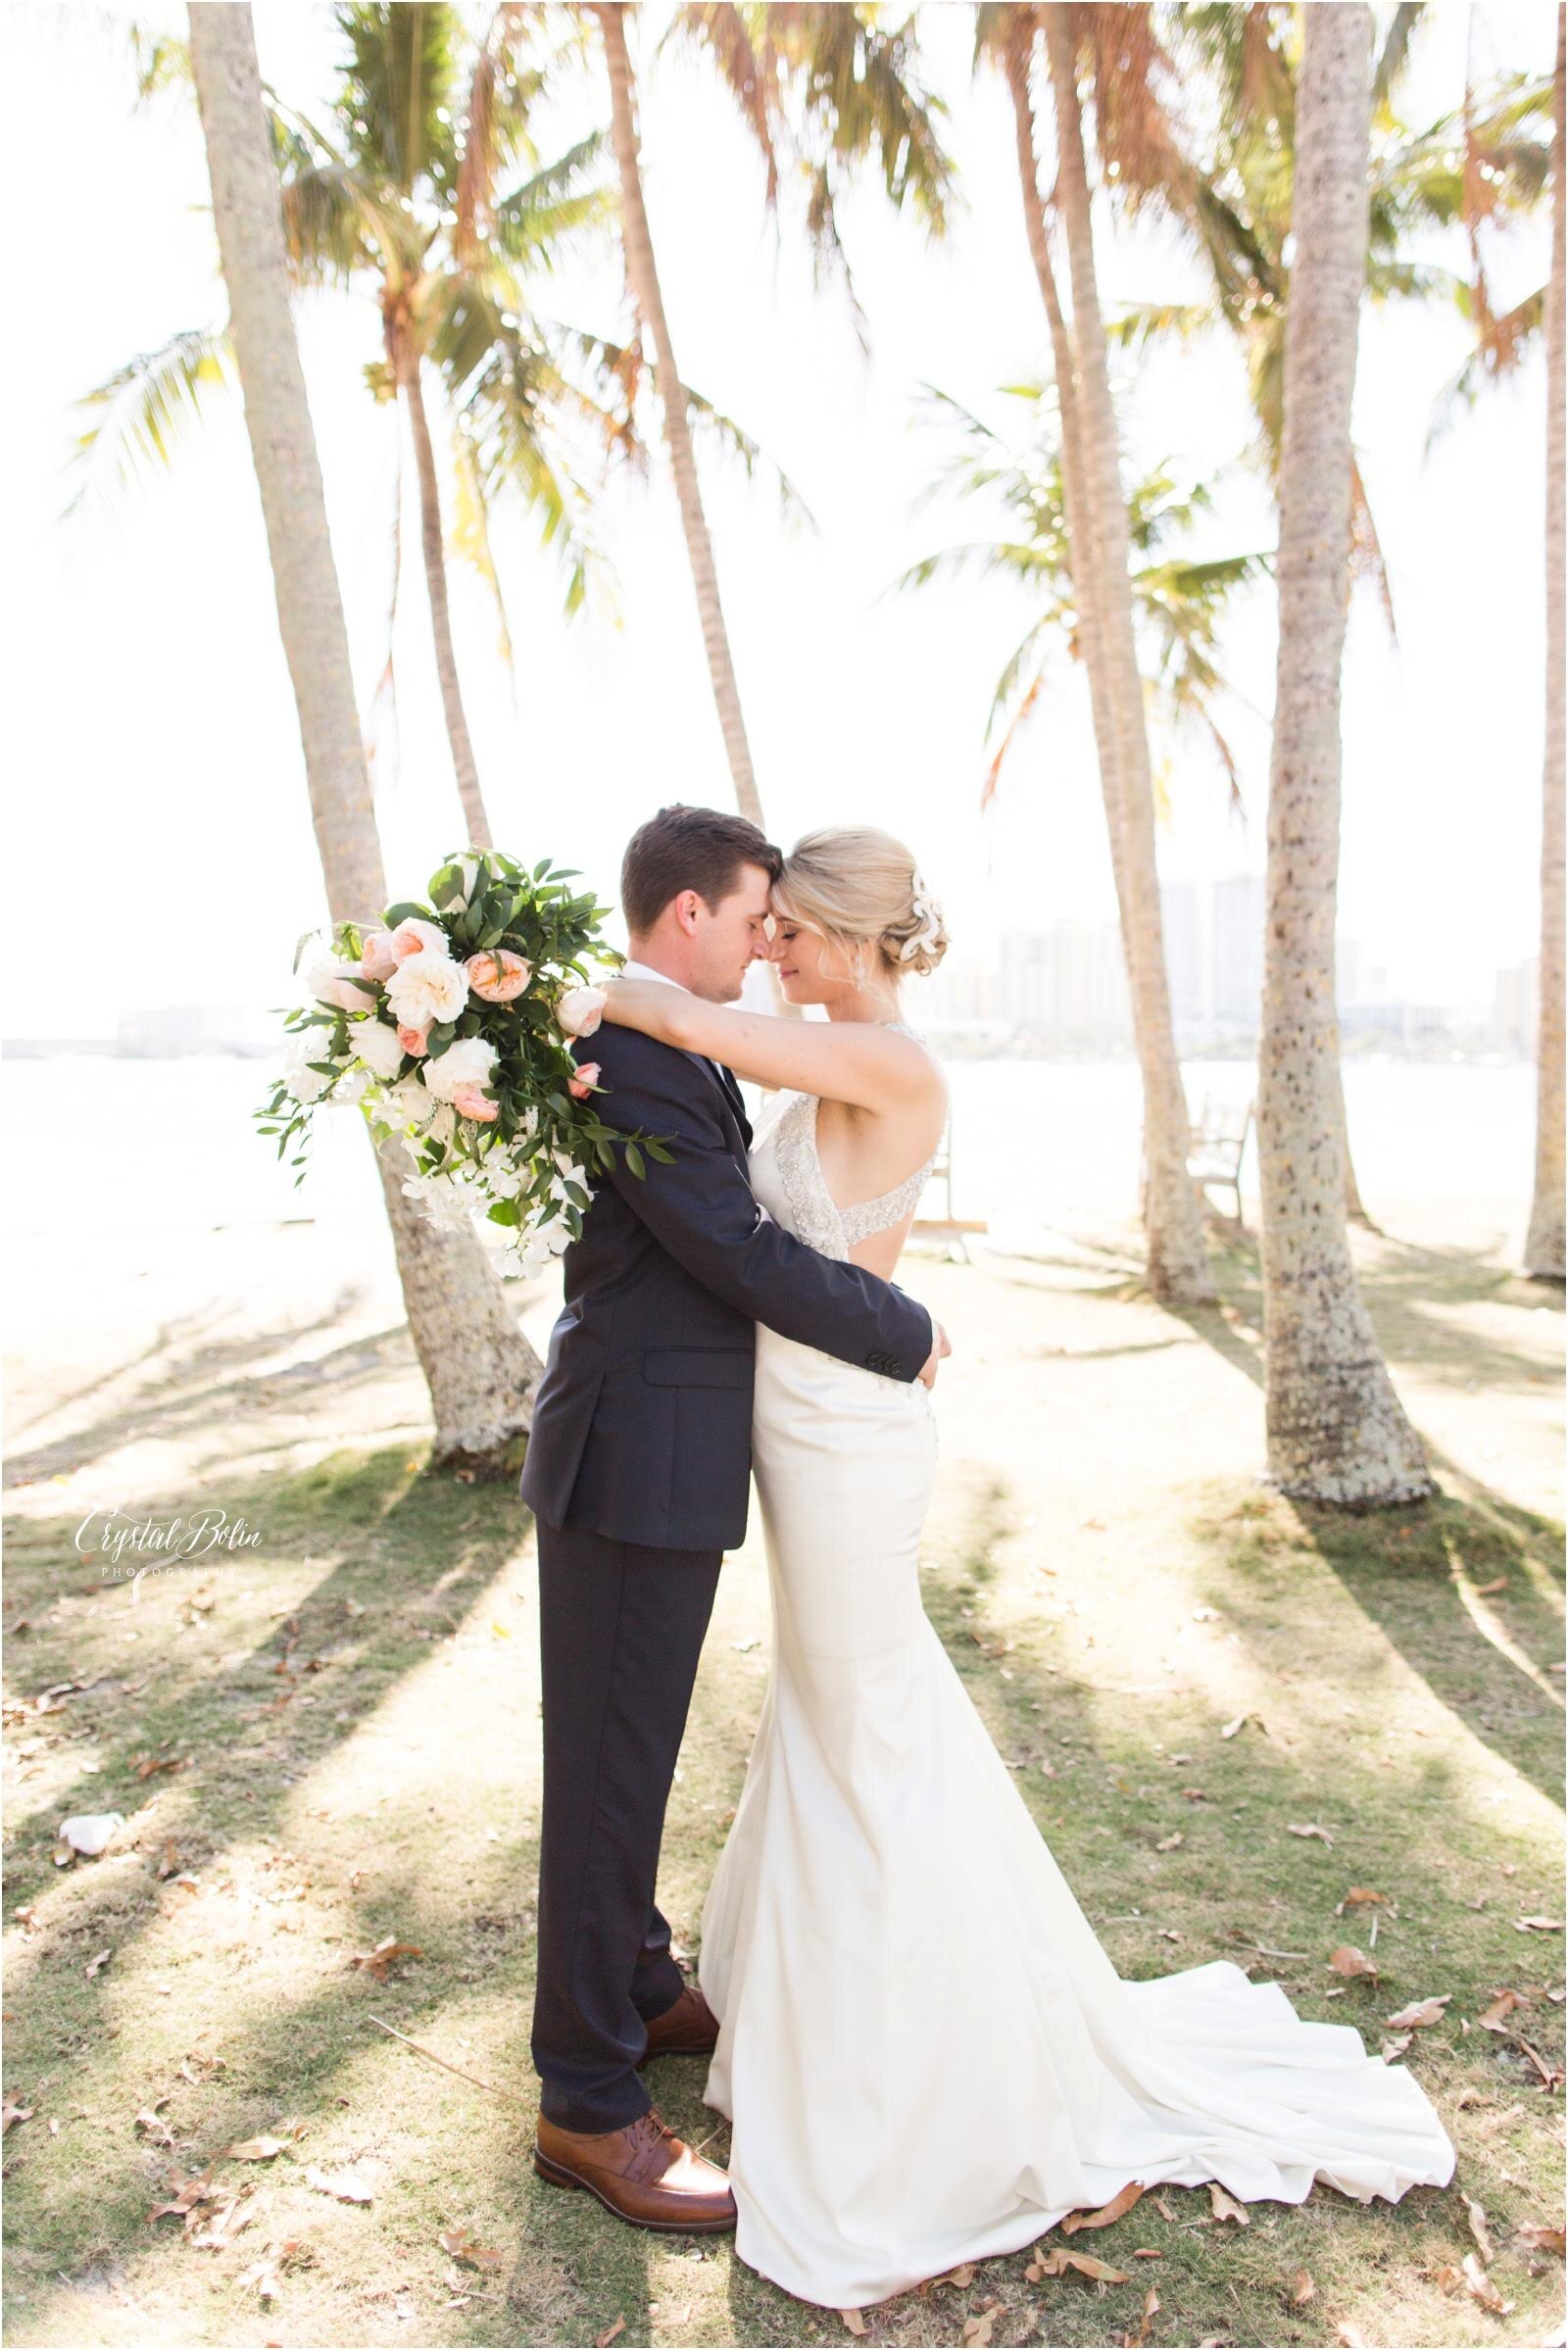 Kirsten & Alex | Tropical Downtown West Palm Beach Wedding | Cry